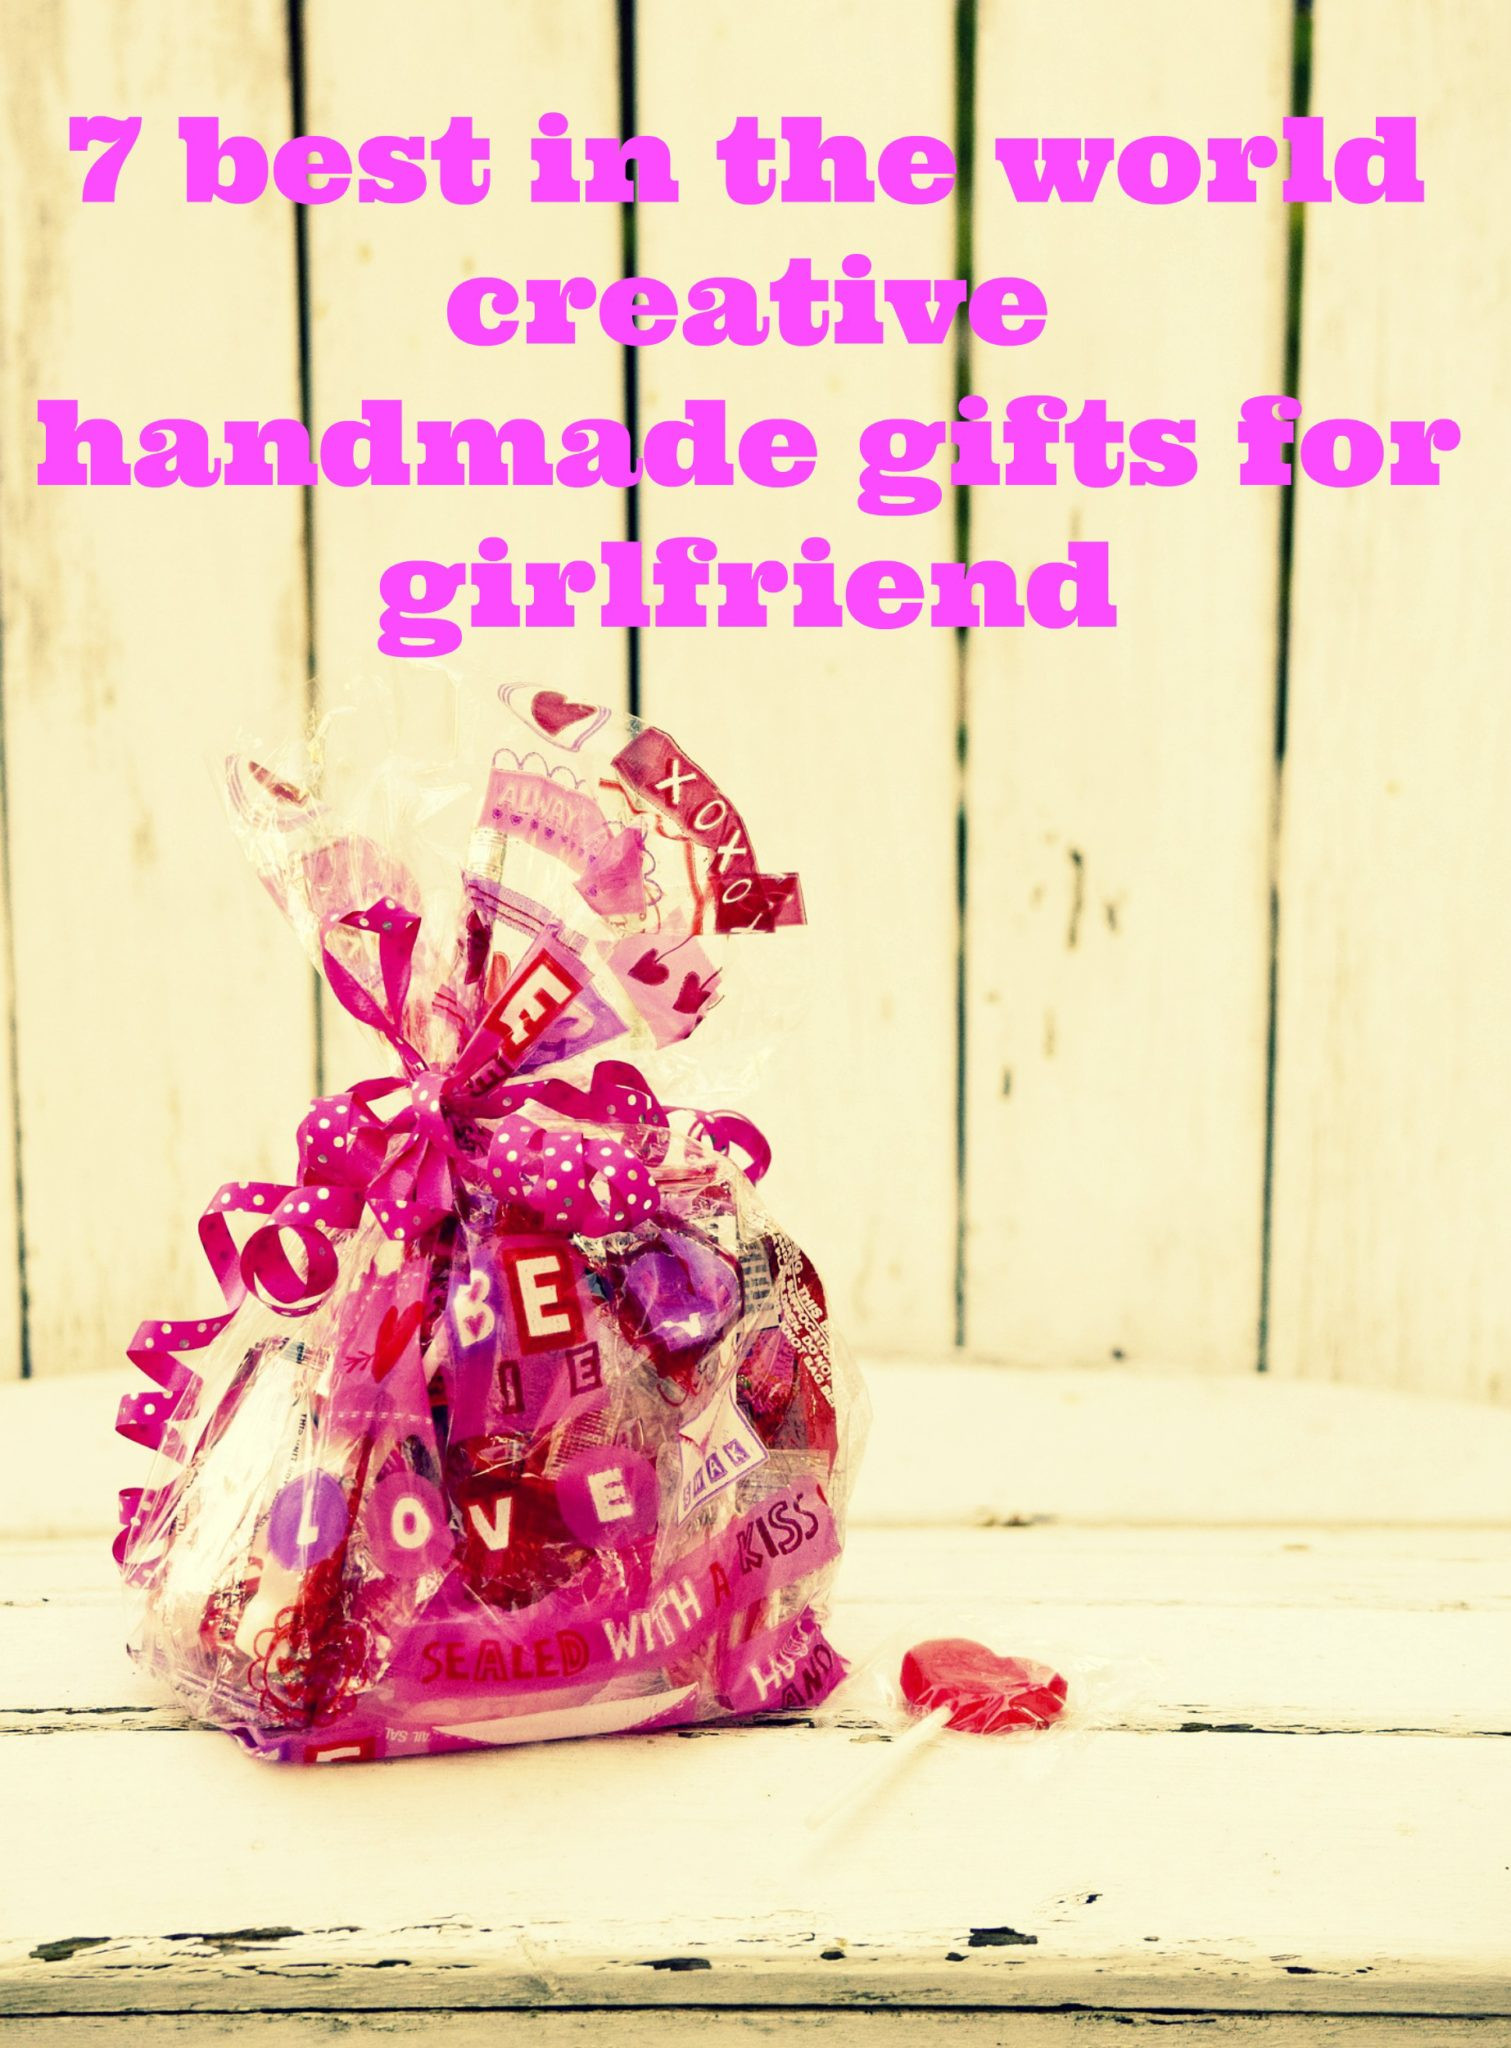 Creative Gift Ideas Girlfriend
 Creative handmade ts for girlfriend handmadeselling